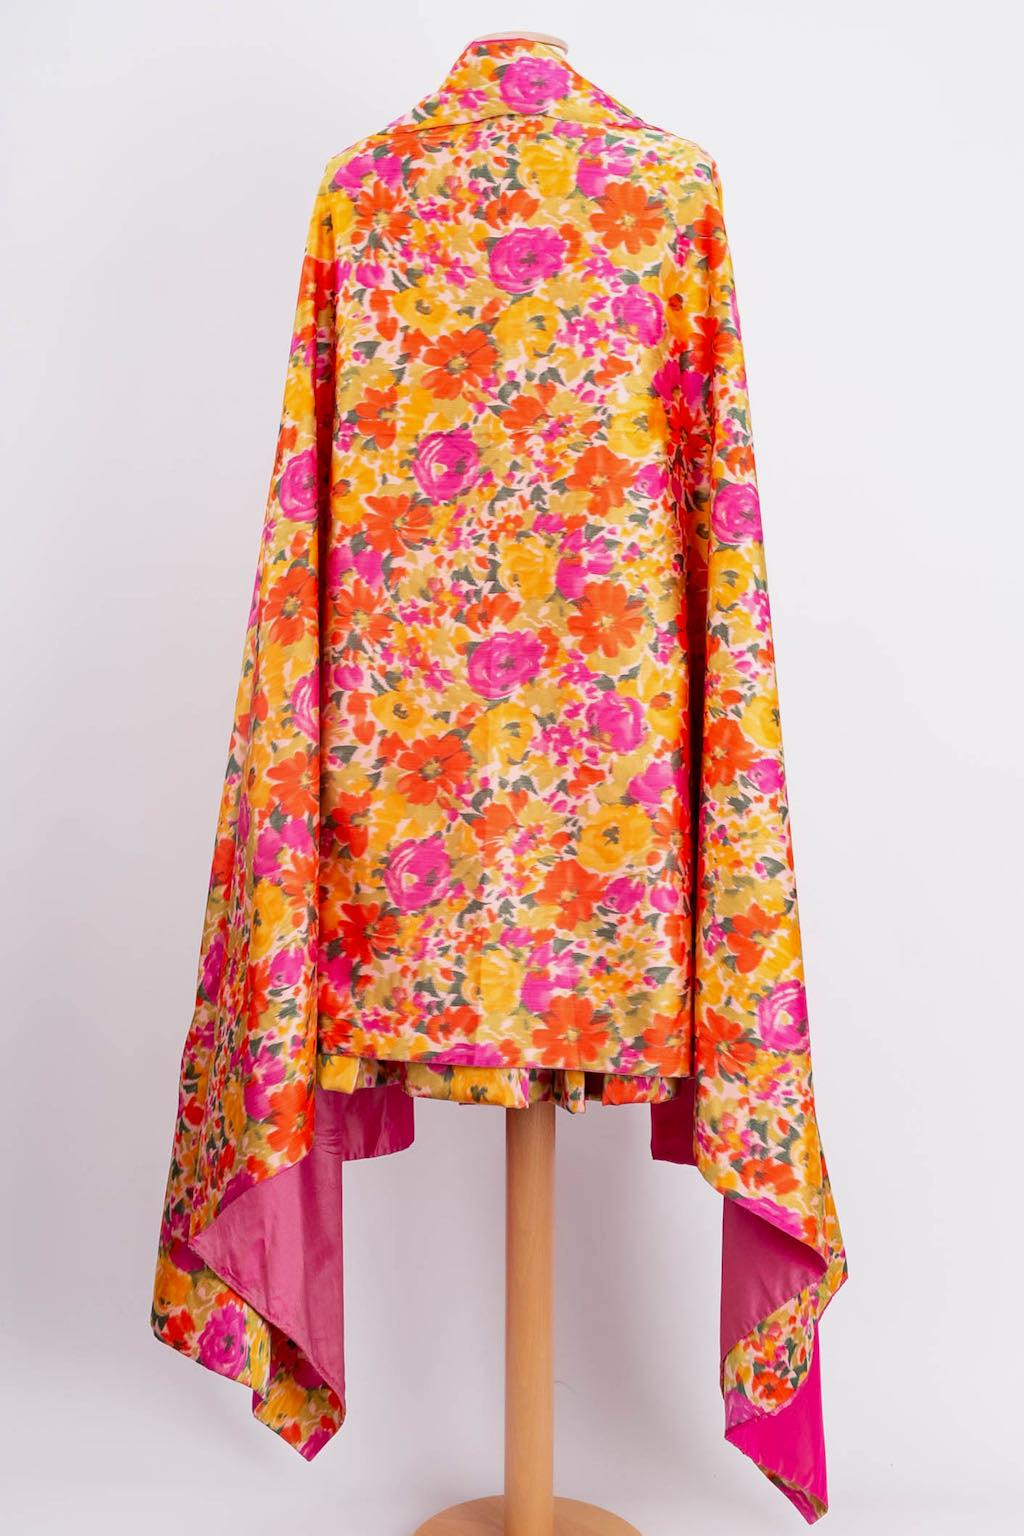 Orange Nina Ricci Flower Silk Dress and its Stole For Sale